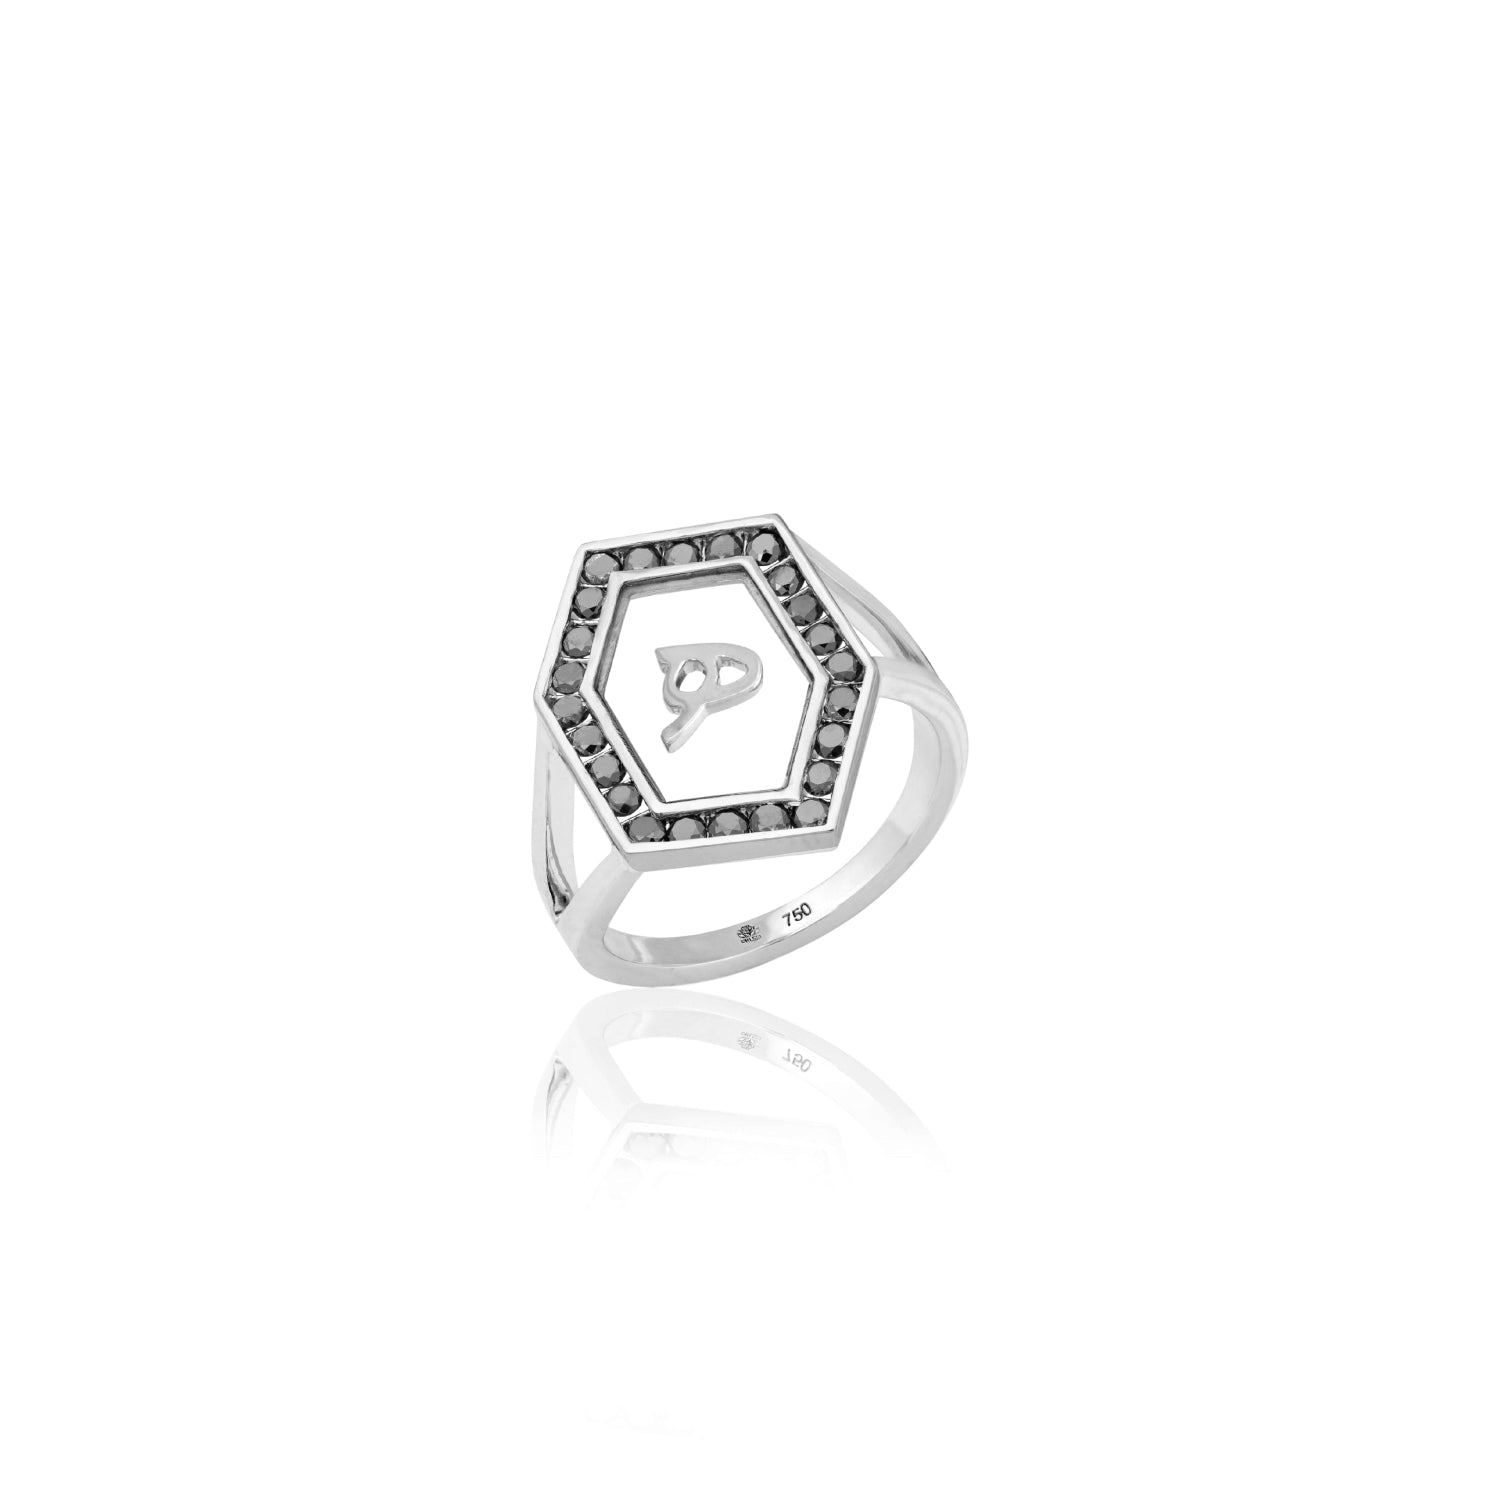 Qamoos 1.0 Letter هـ Black Diamond Ring in White Gold